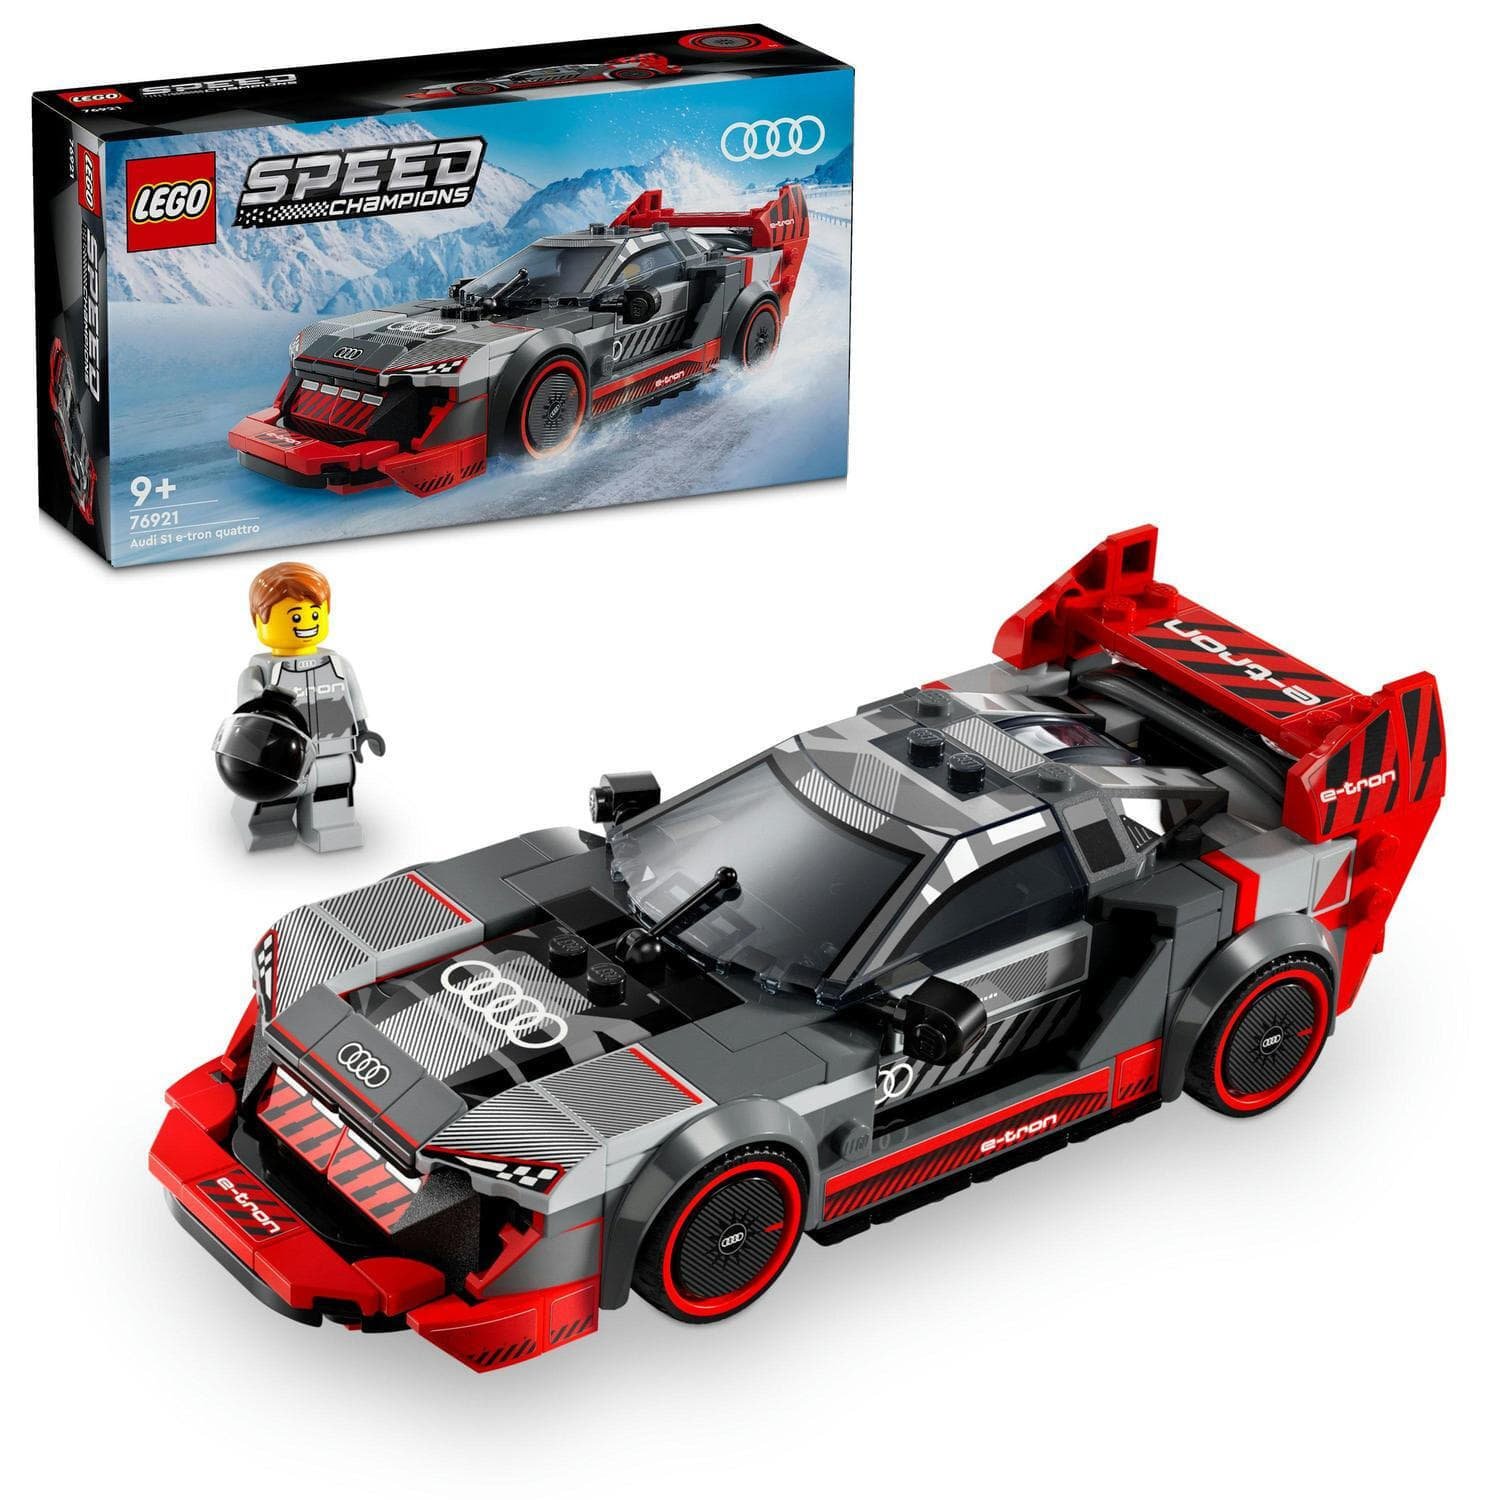 Speed Champions 76921 Audi S1 e-tron quattro Race Car